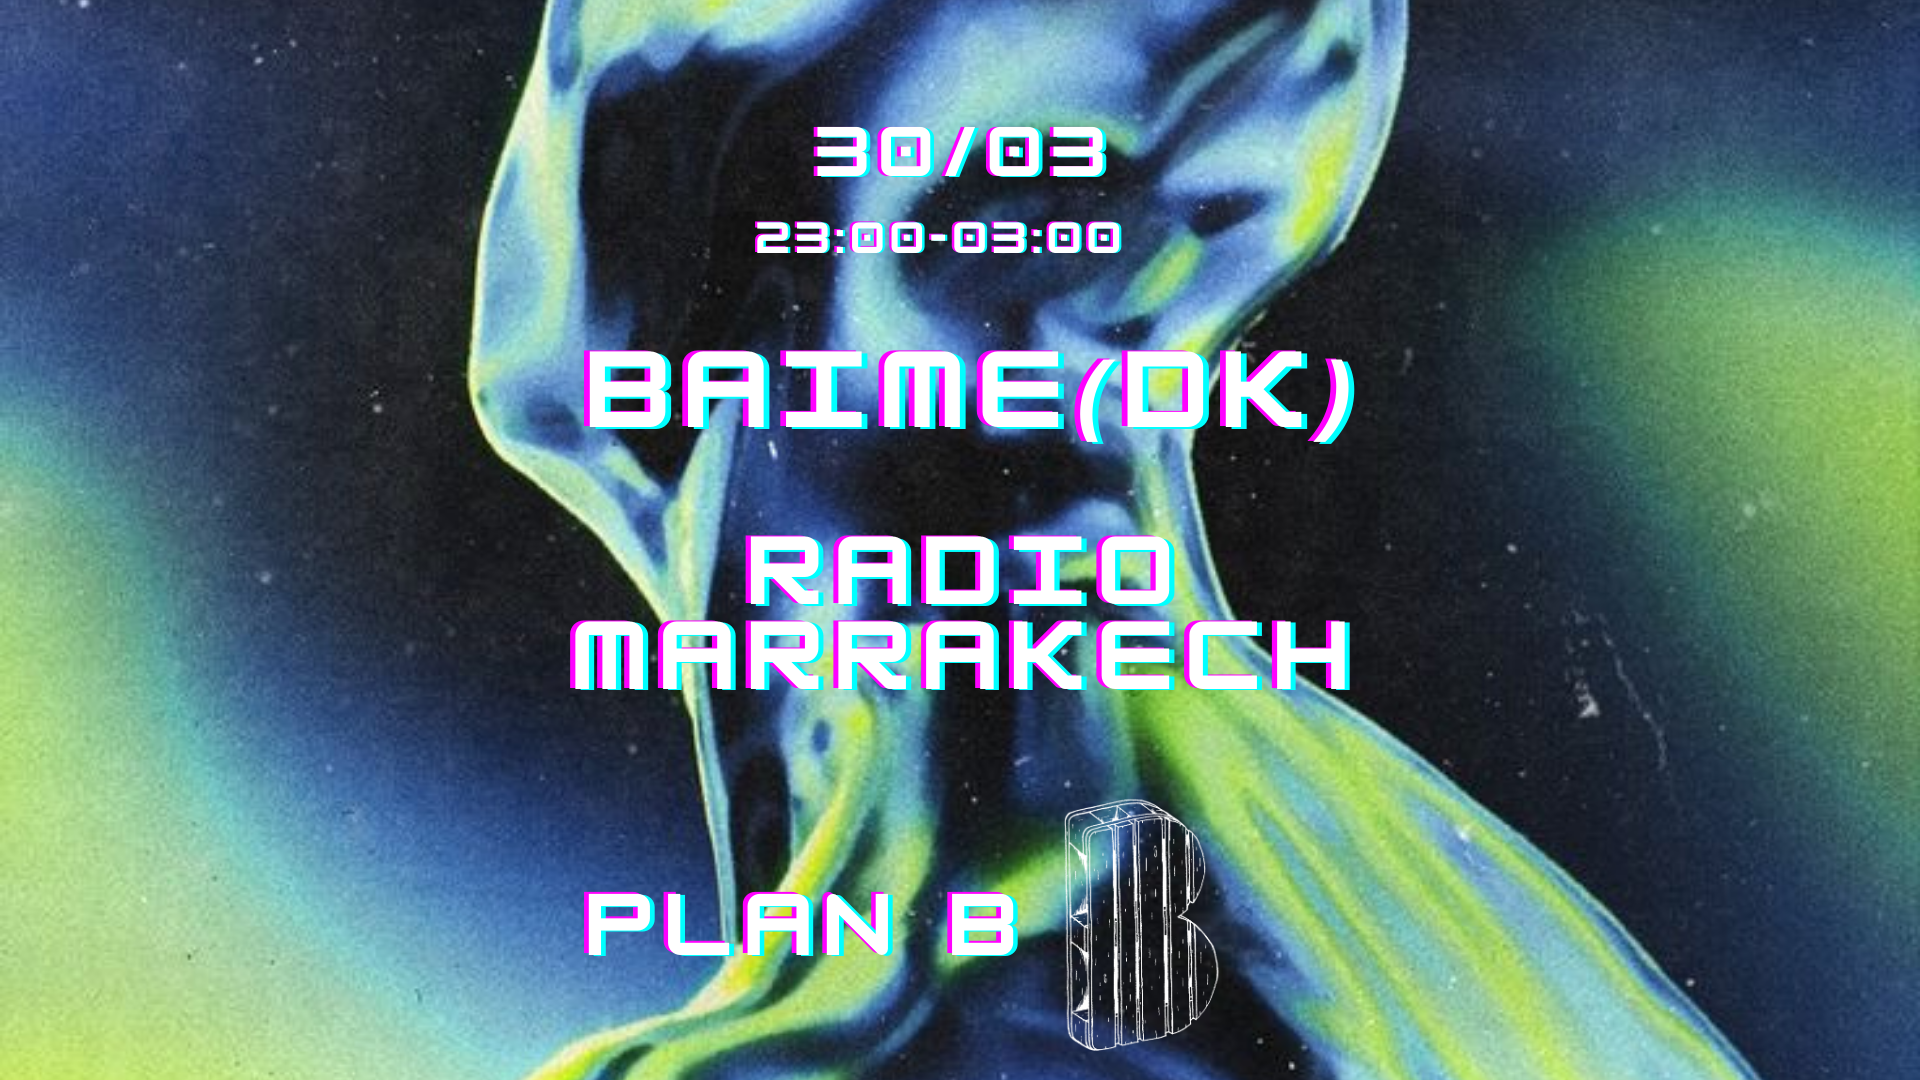 Radio Marrakech & Baime (DK) // Plan B Malmö - Página frontal